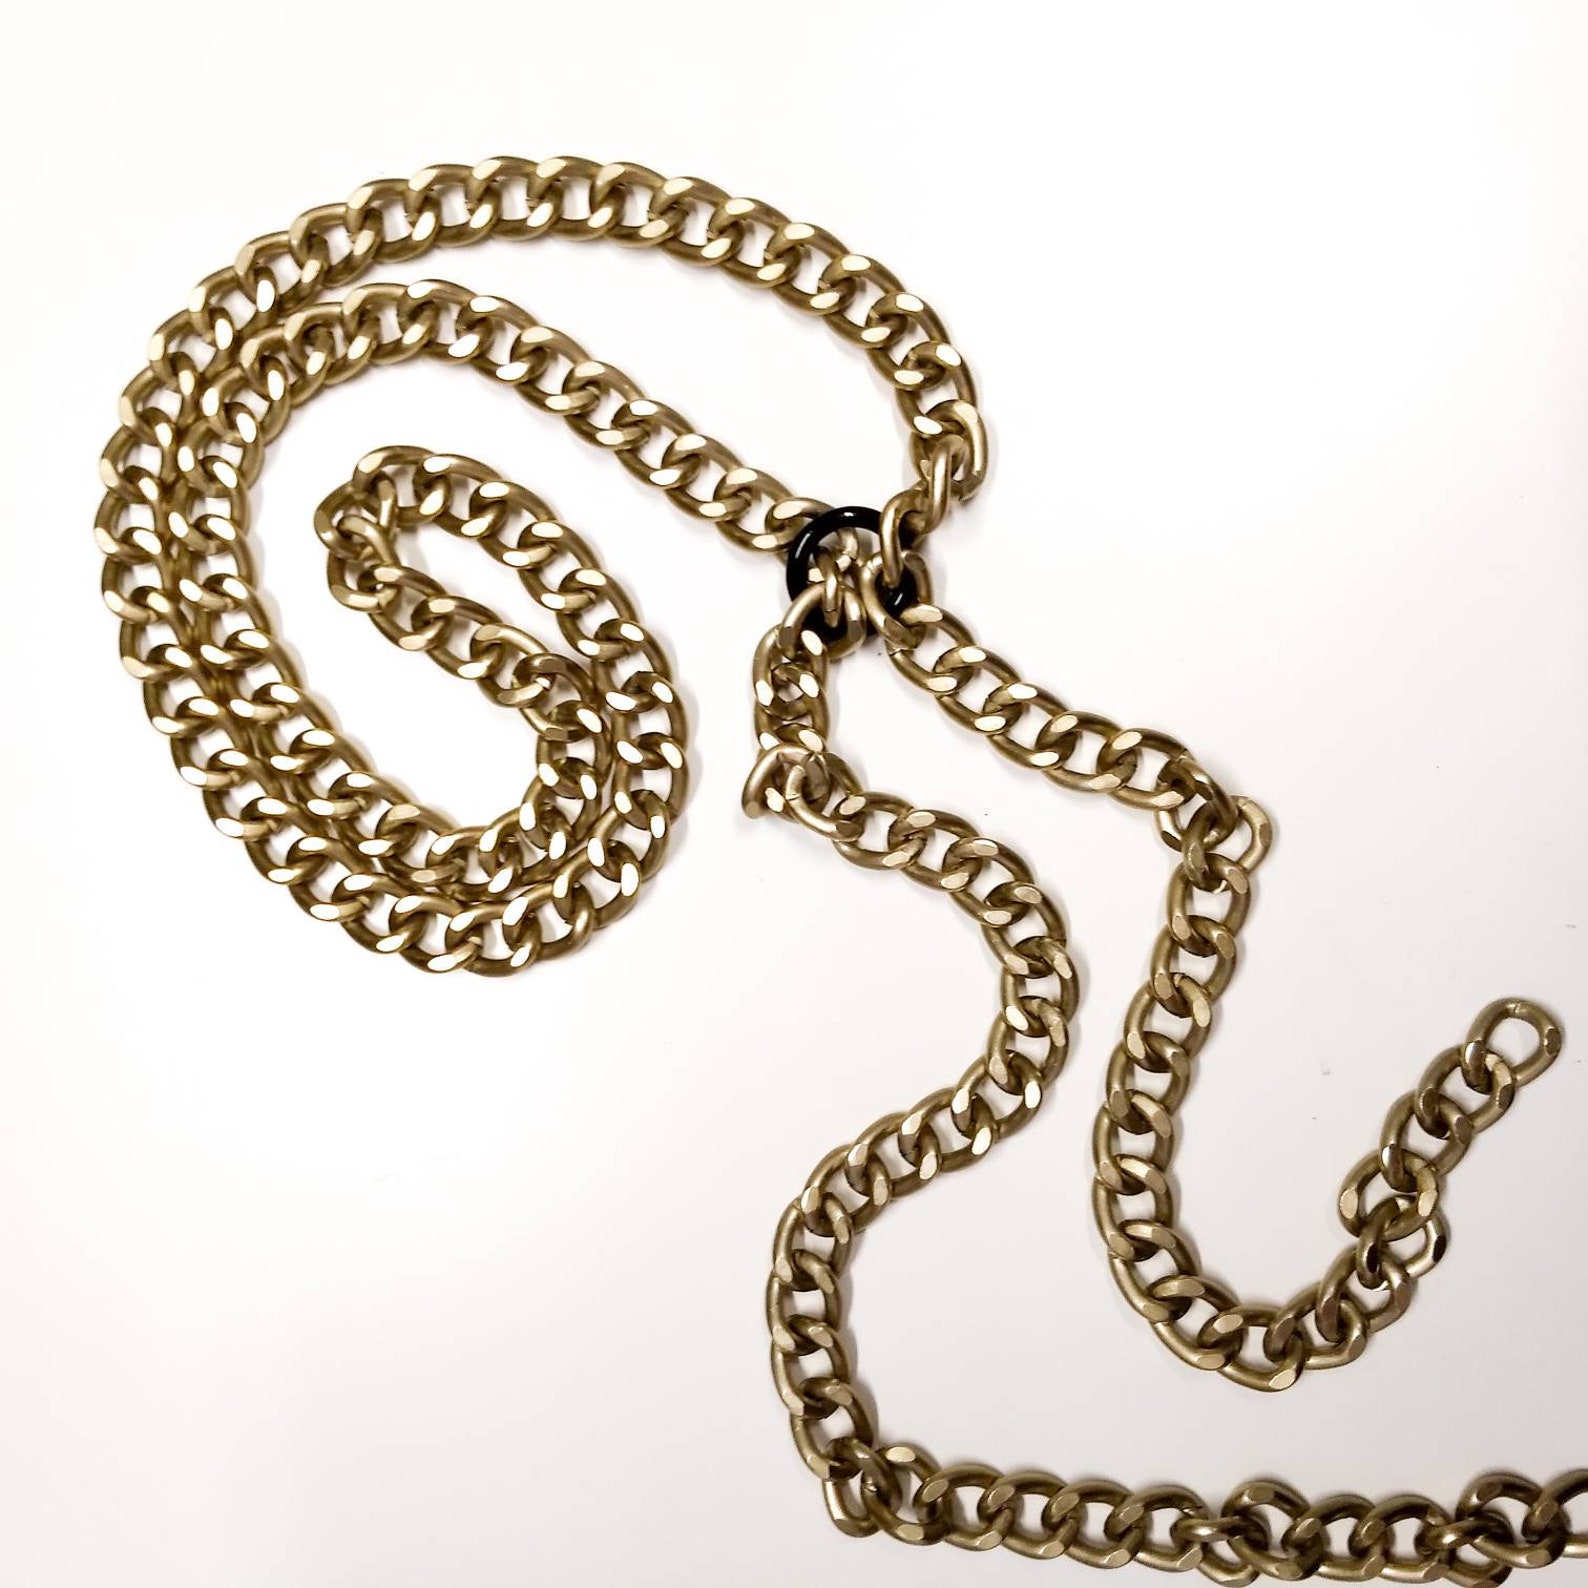 Rustic Gold chain belt plus size chain belt women everyday | Etsy